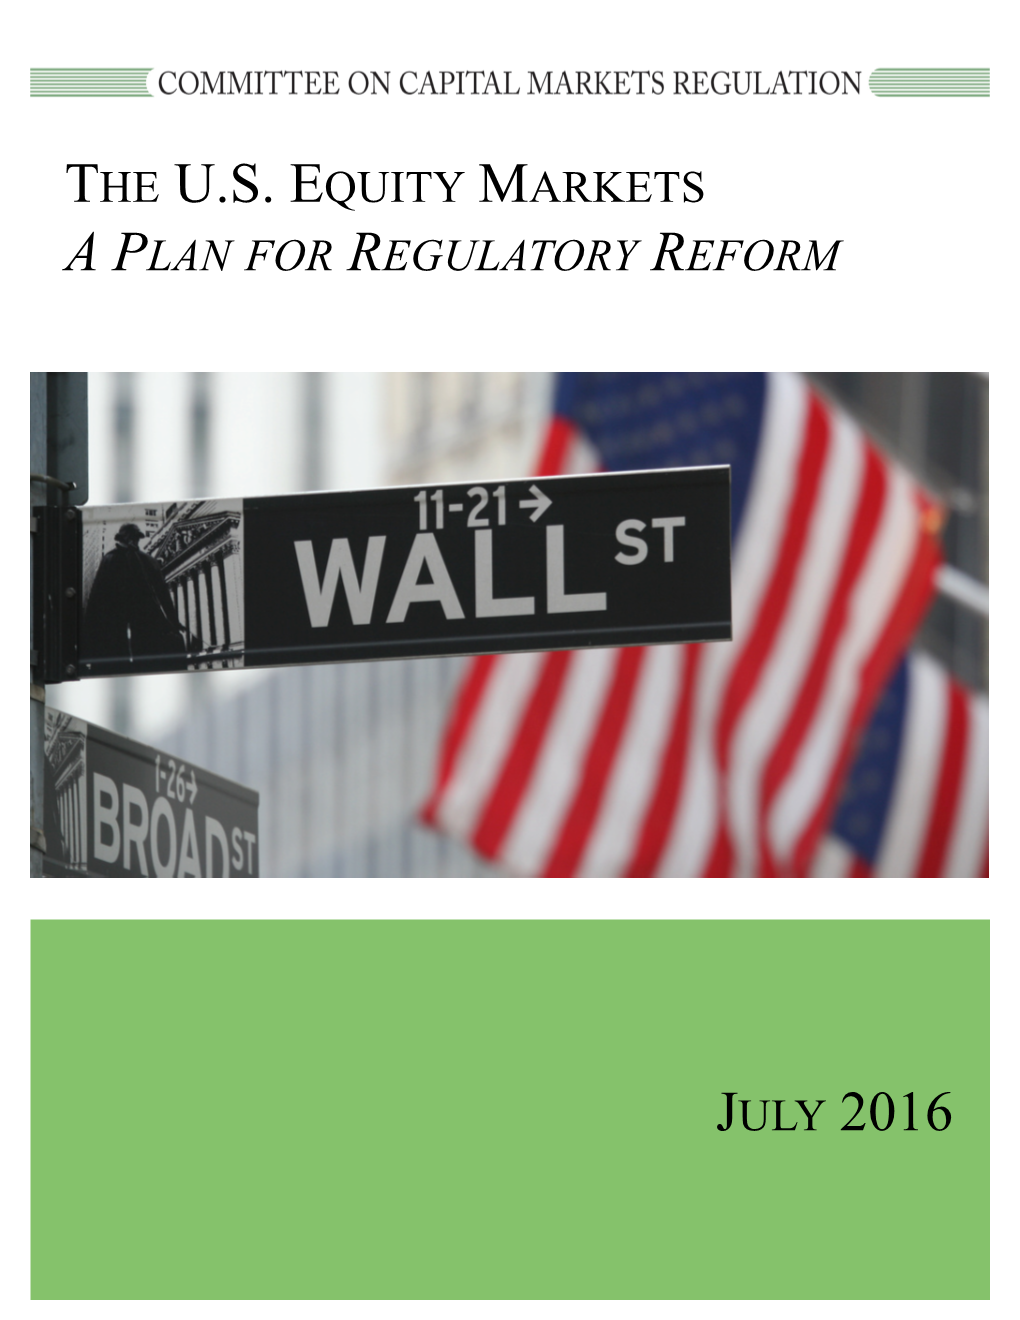 The U.S. Equity Markets a Plan for Regulatory Reform